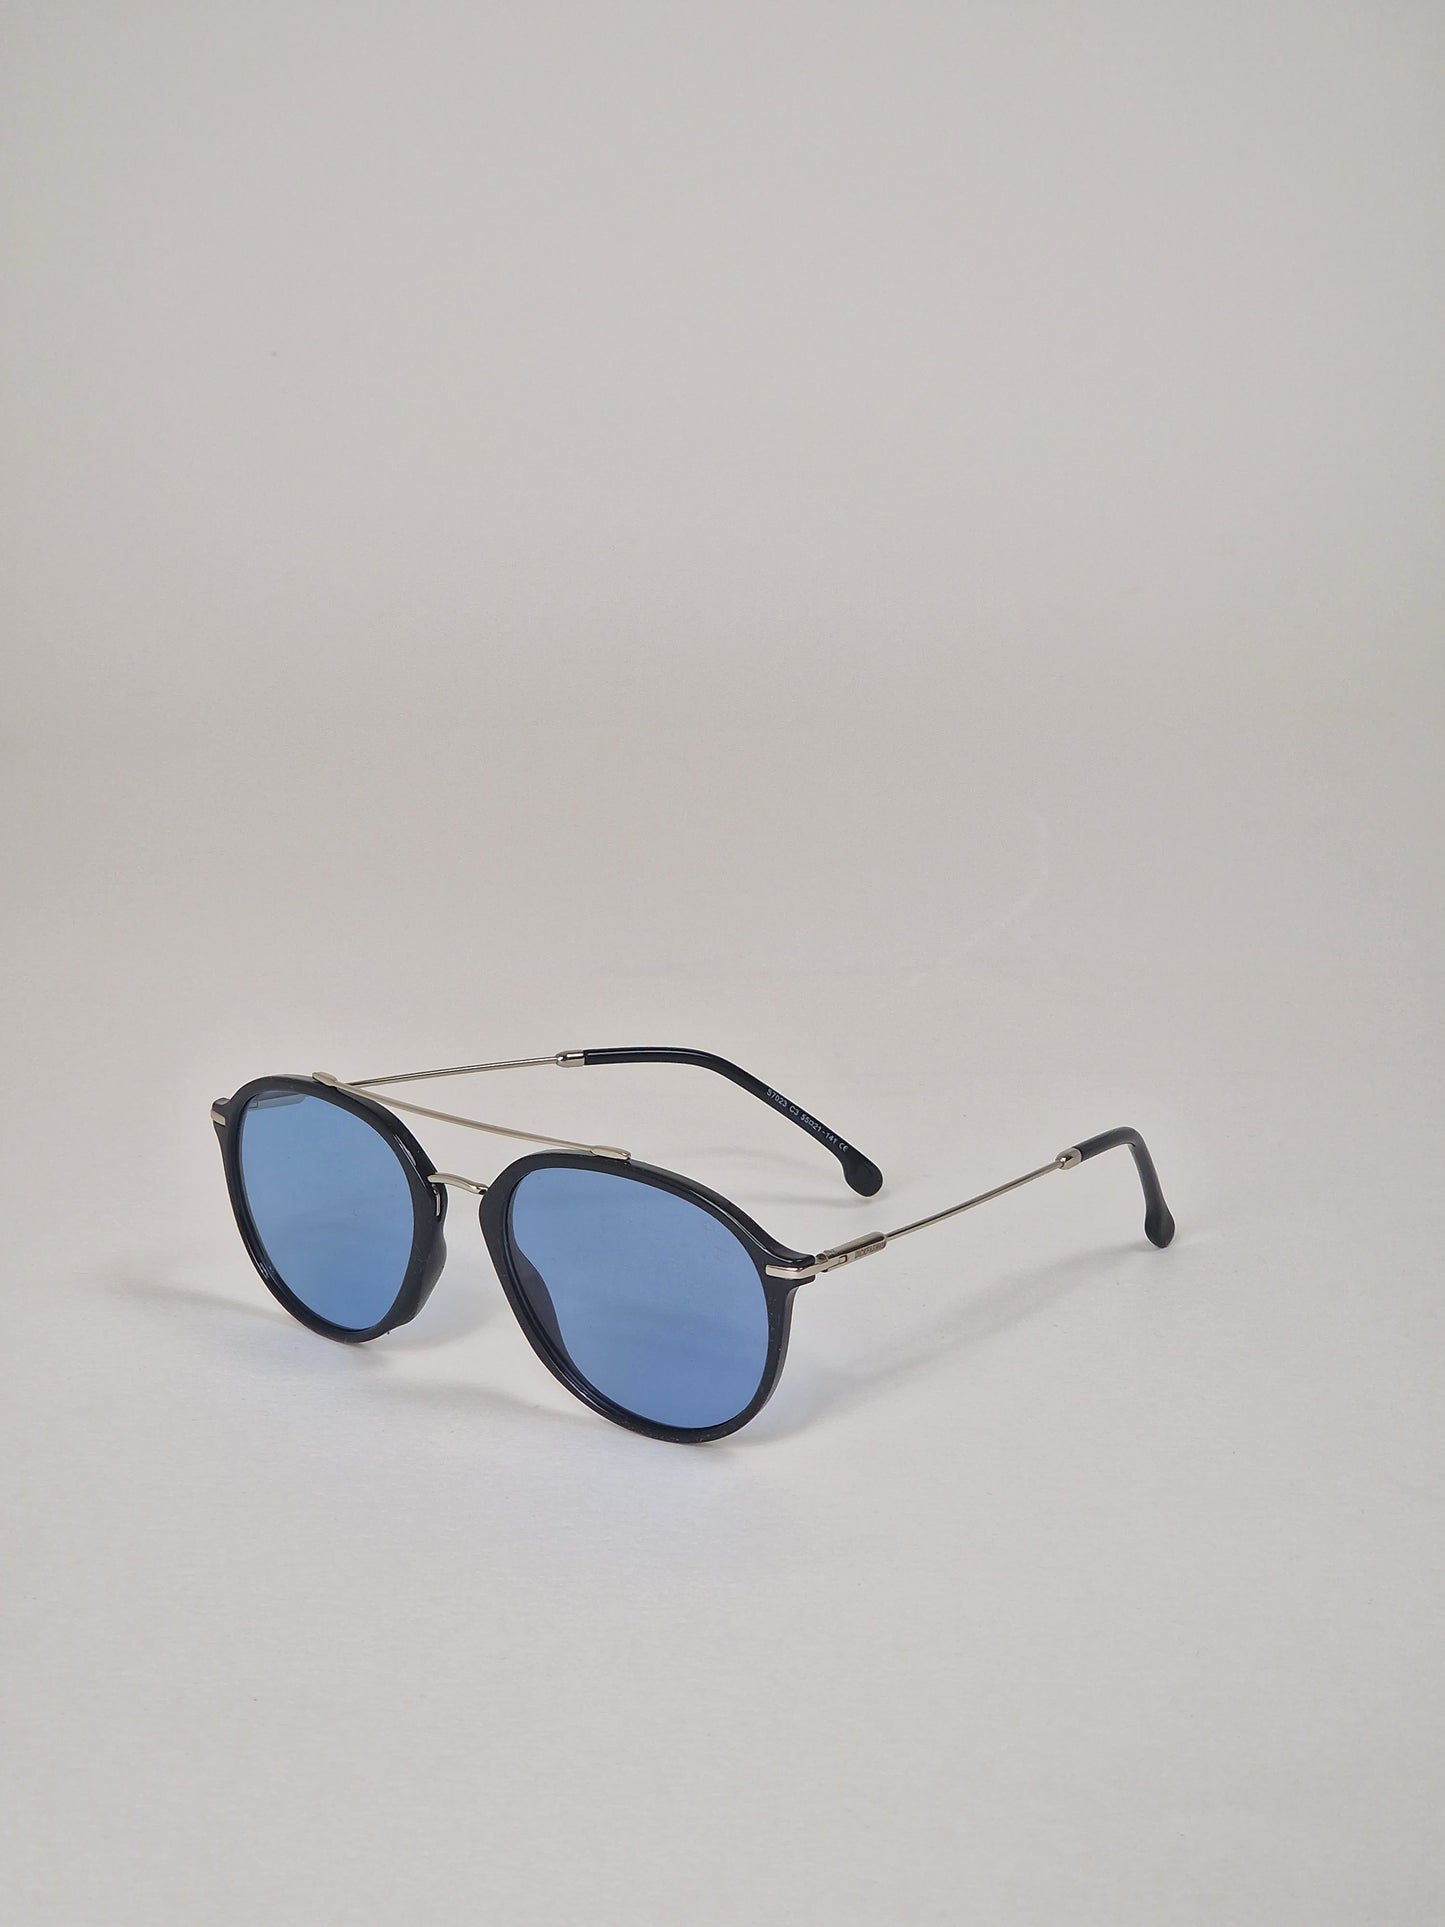 Sunglasses, model 16 - Blue tinted.